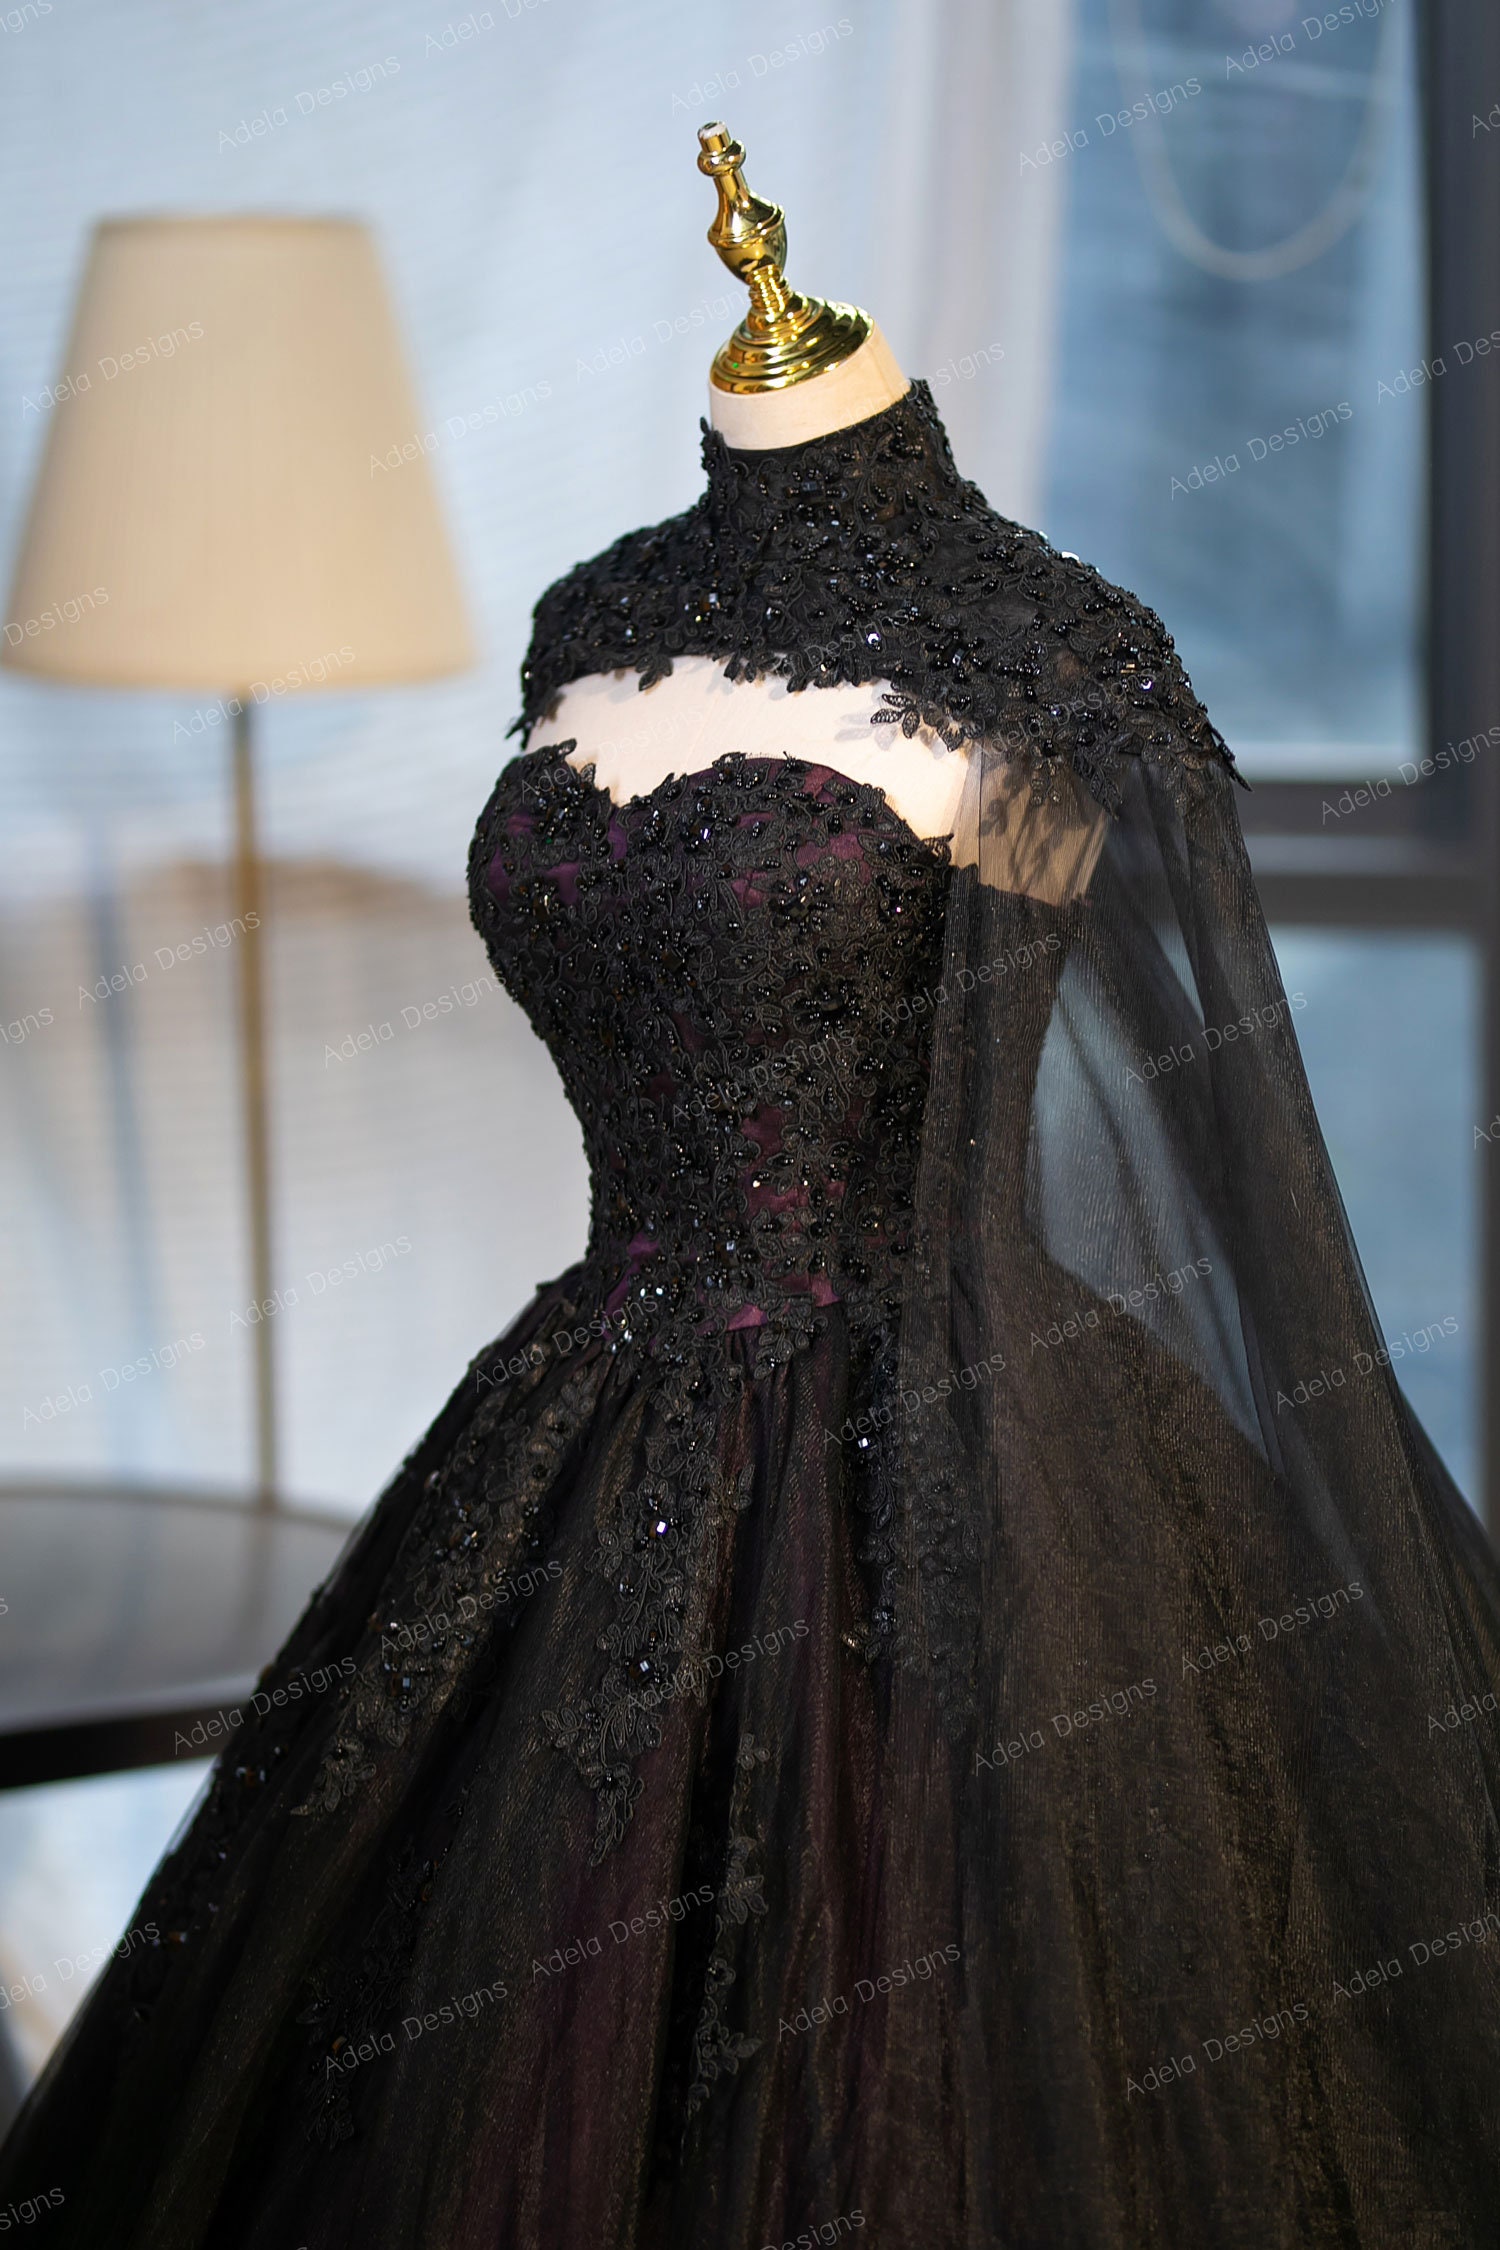 Gothic Fairy Wedding Dresses - Black Gothic Gown Plus Size –  WonderlandByLilian